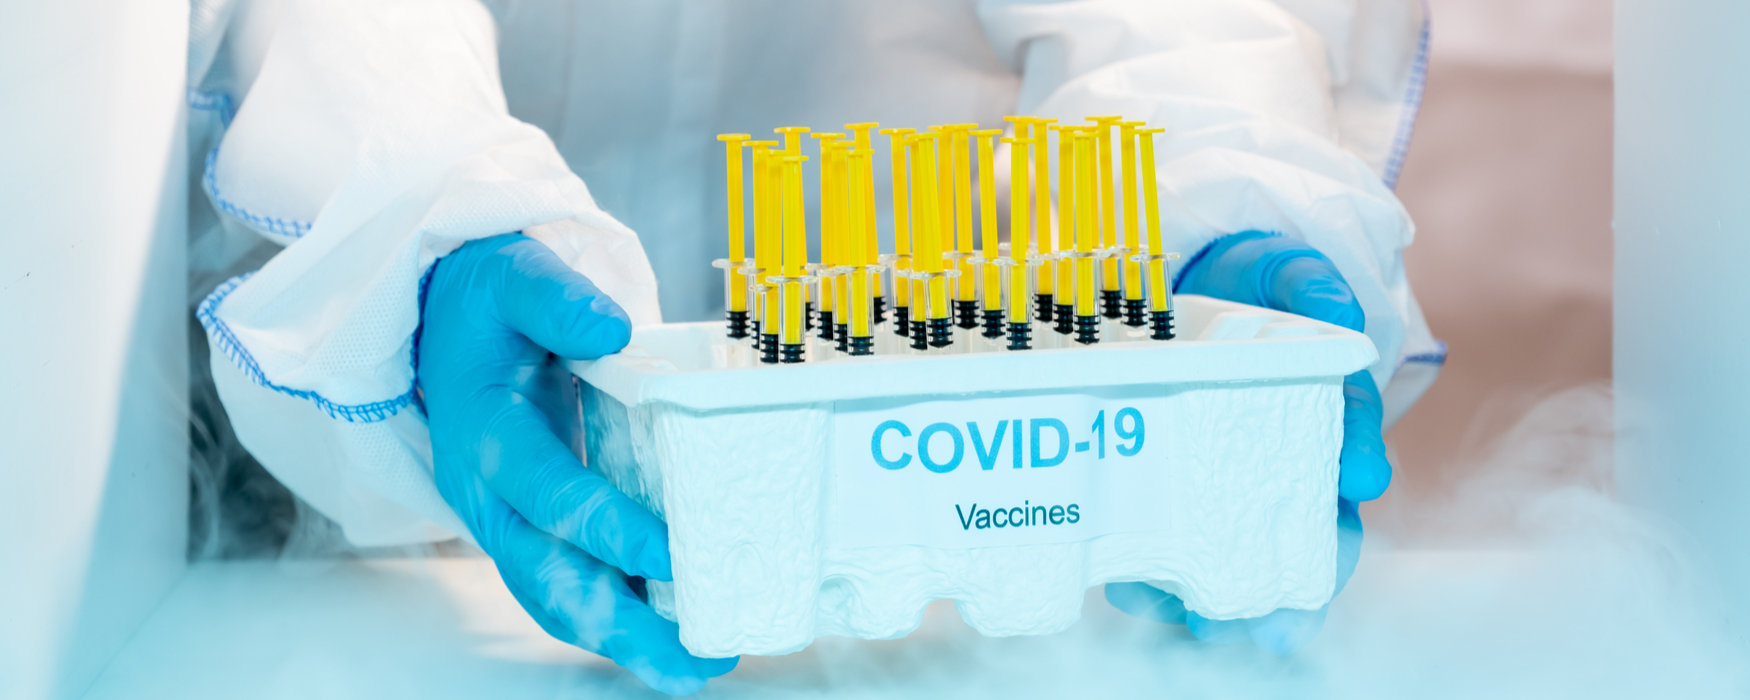 Wyoming covid vaccine freezers - covid 19 vaccine freezer - vaccine storage in Wyoming